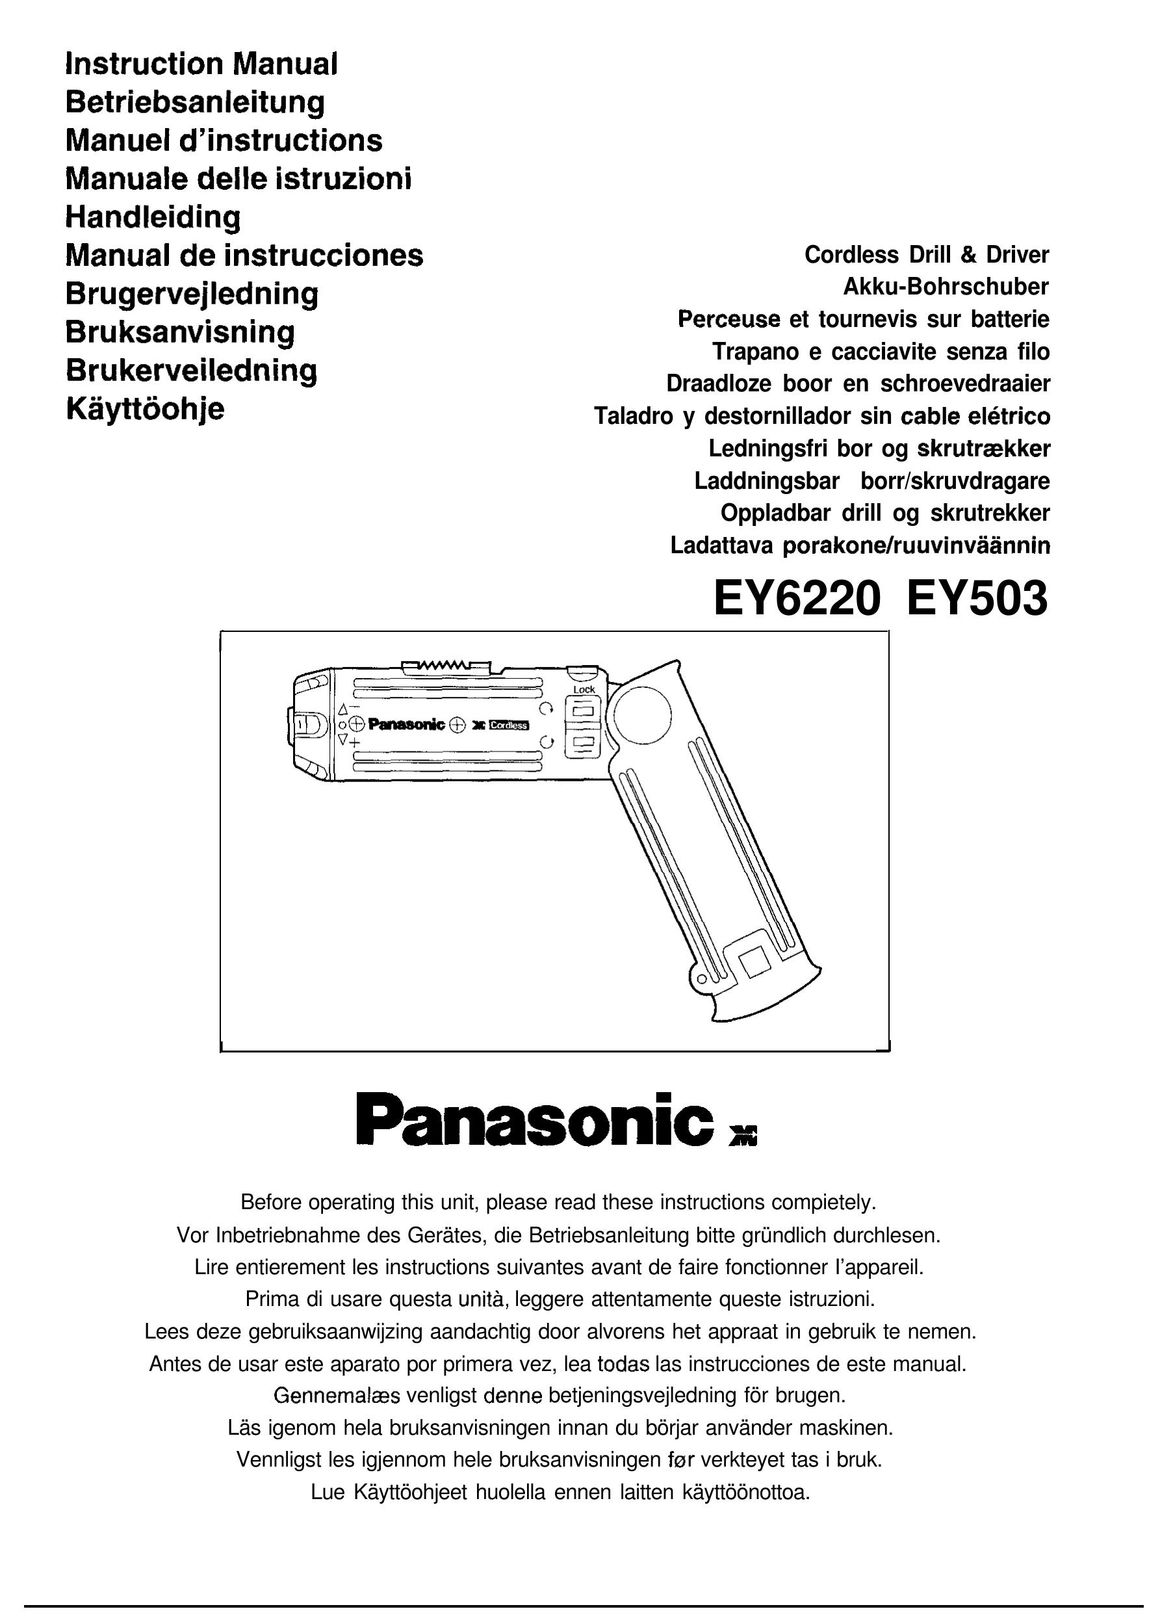 Panasonic EY 503 Drill User Manual